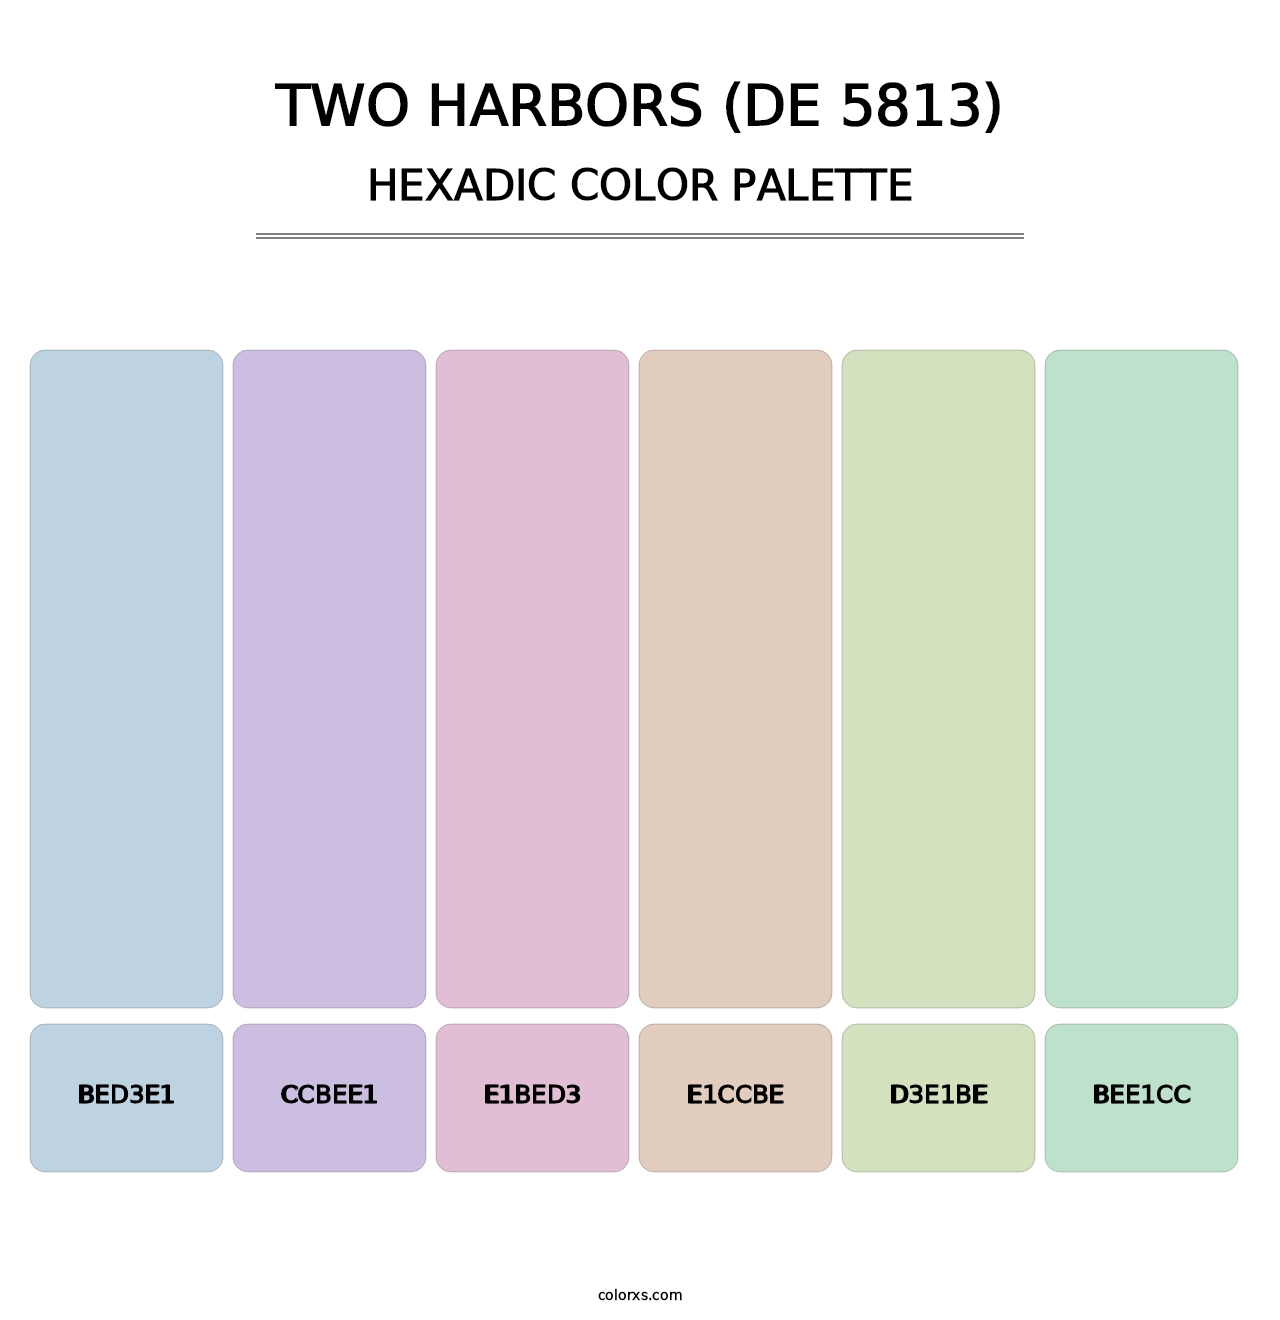 Two Harbors (DE 5813) - Hexadic Color Palette